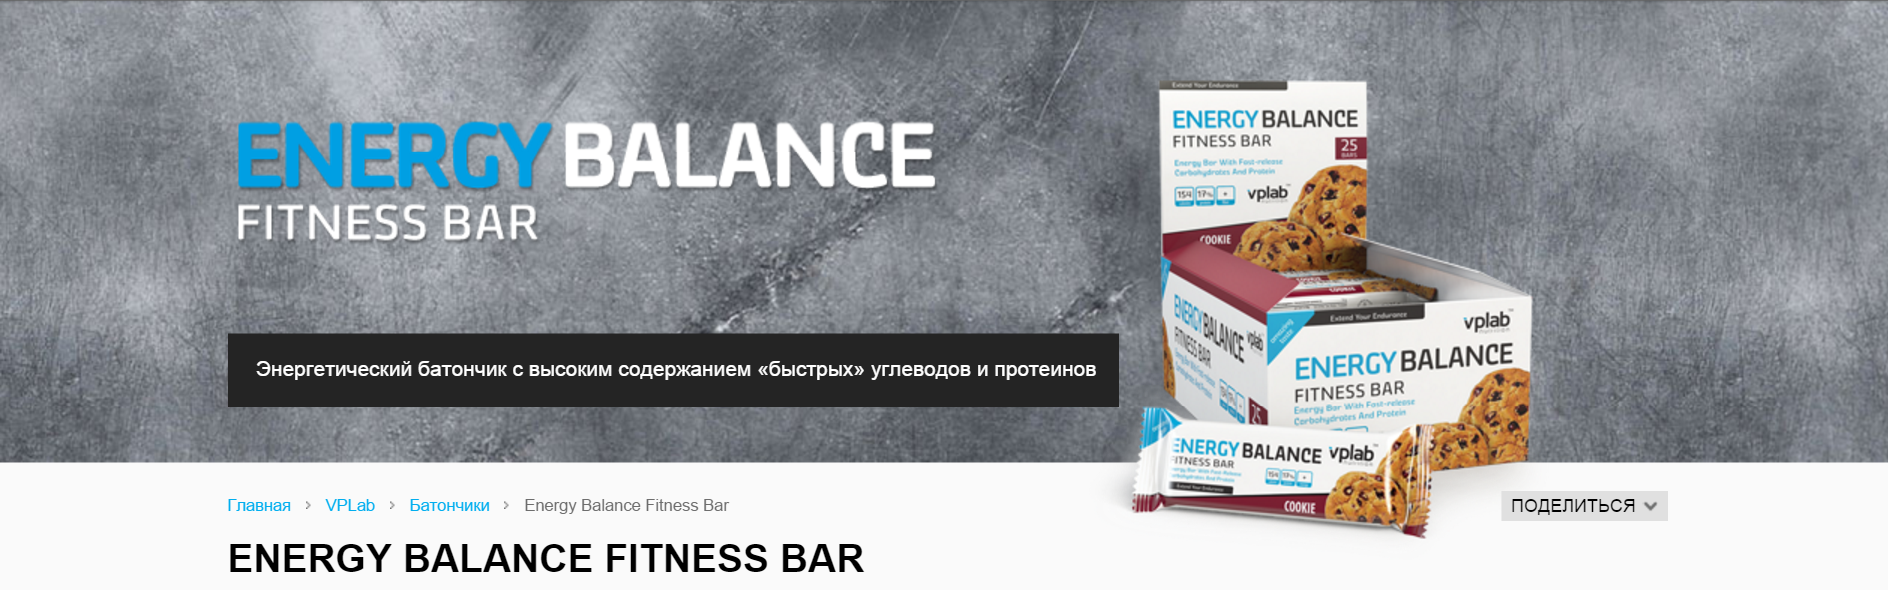 Энергетический батончик Energy Balance Fitness Bar от VP laboratory